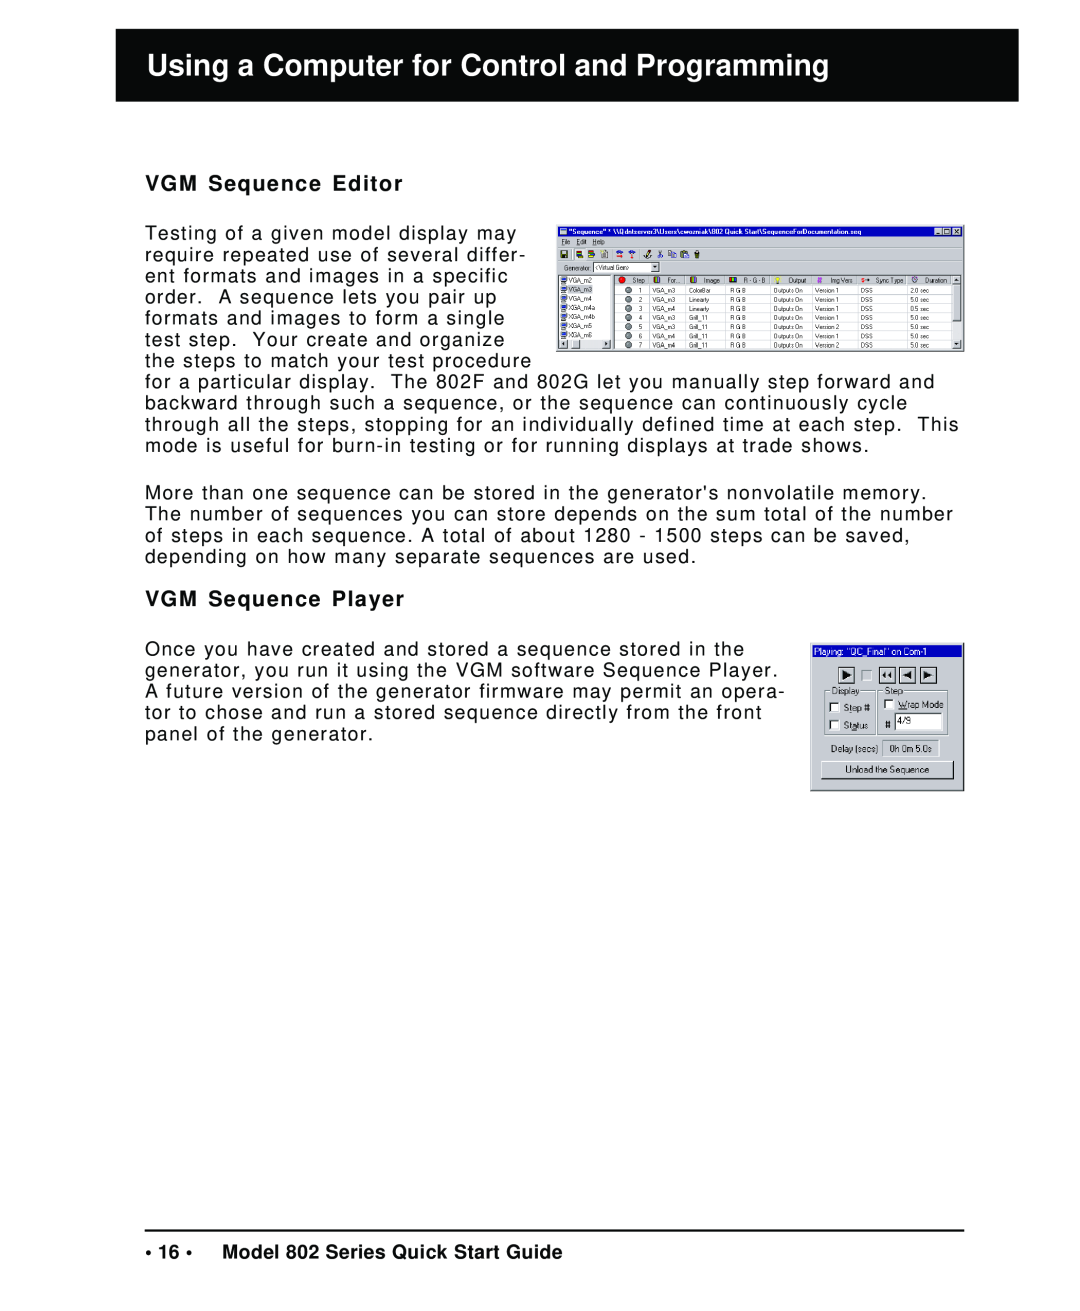 Quantum Data quick start VGM Sequence Editor, VGM Sequence Player, Model 802 Series Quick Start Guide 